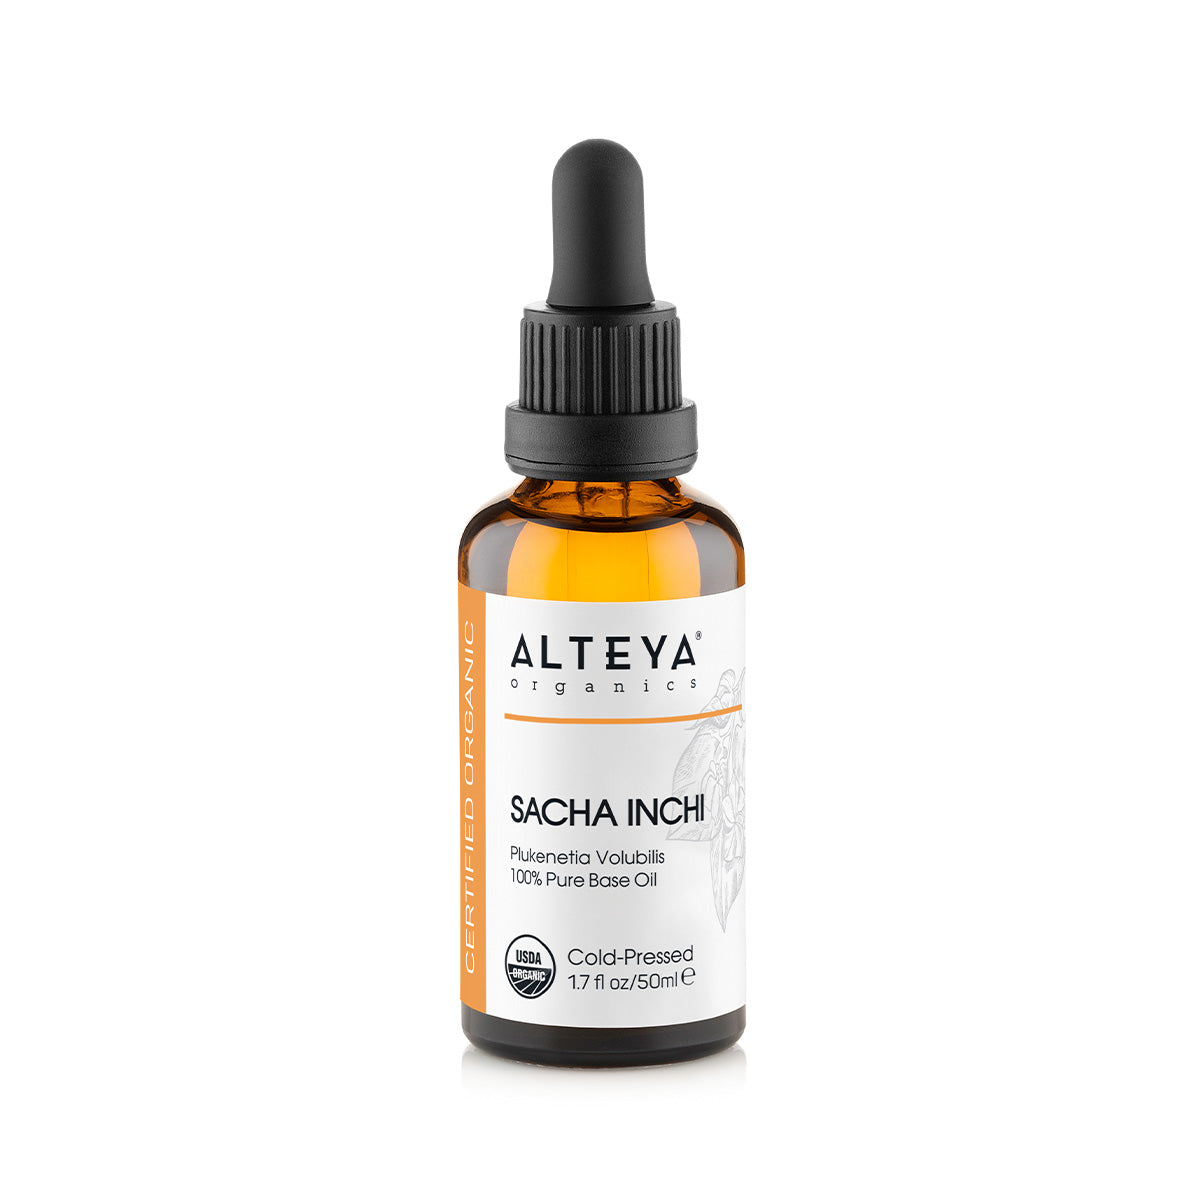 A bottle of Alteya Organics' Organic Sacha Inchi Seed Carrier Oil rich in omega-3 fatty acids.